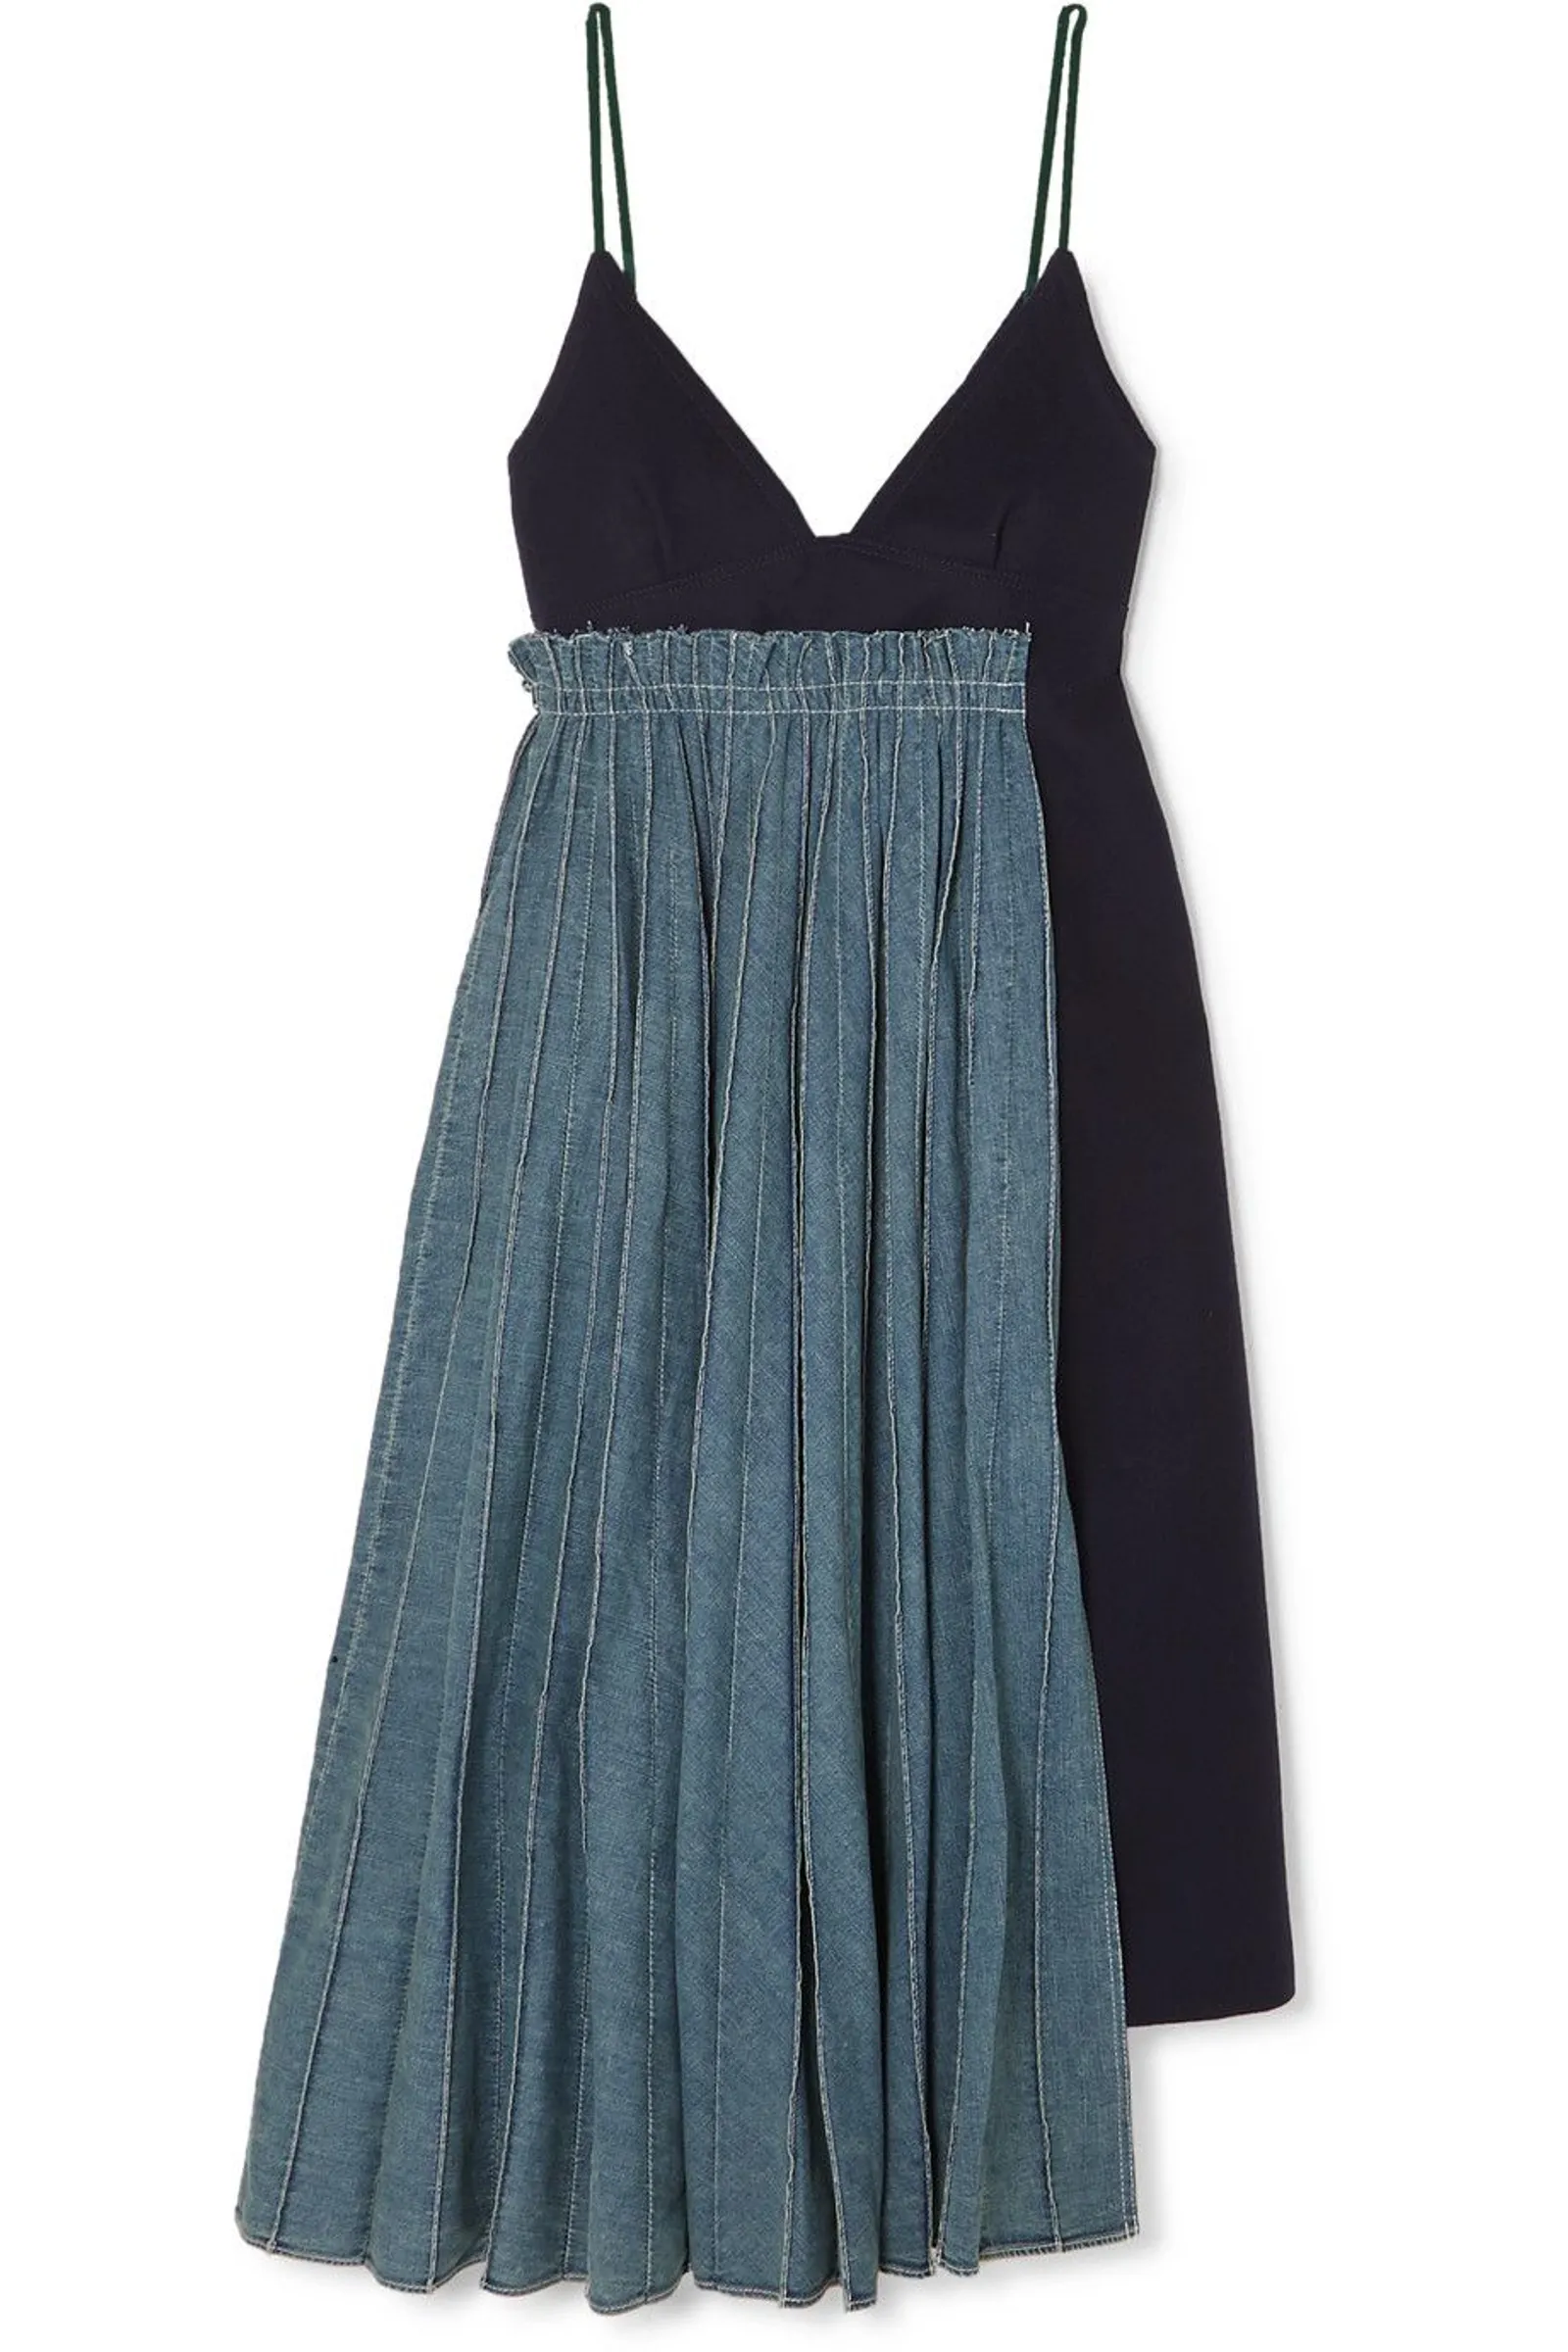 #PopbelaOOTD: Rekomendasi Dress Edgy di Weekend Ini